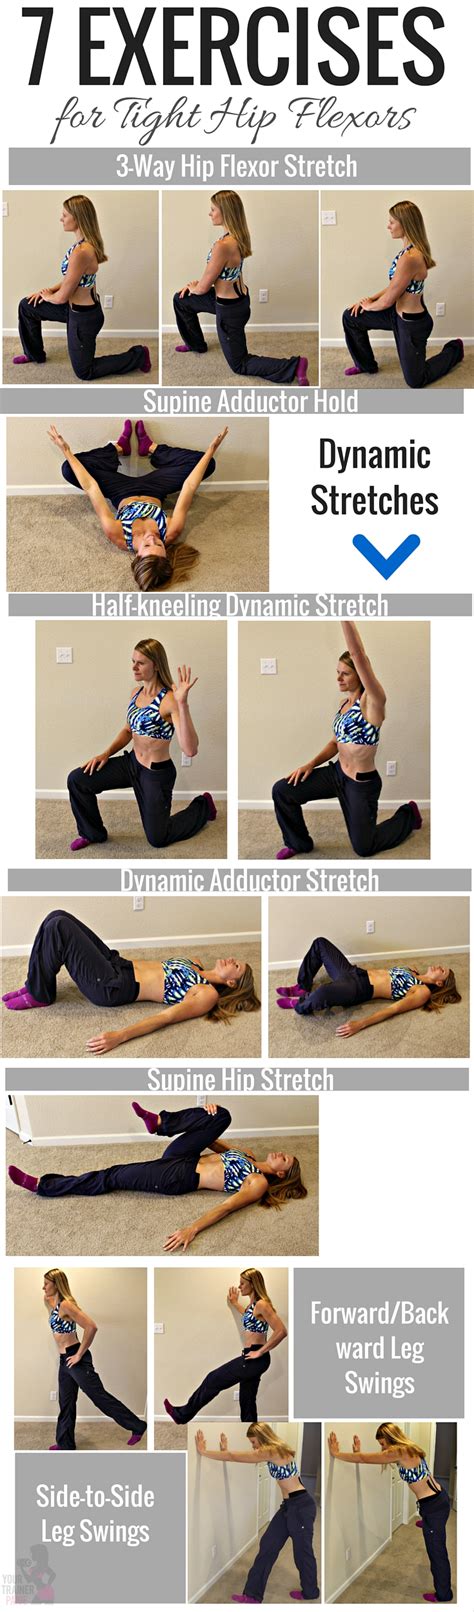 7 Exercises For Tight Hip Flexors